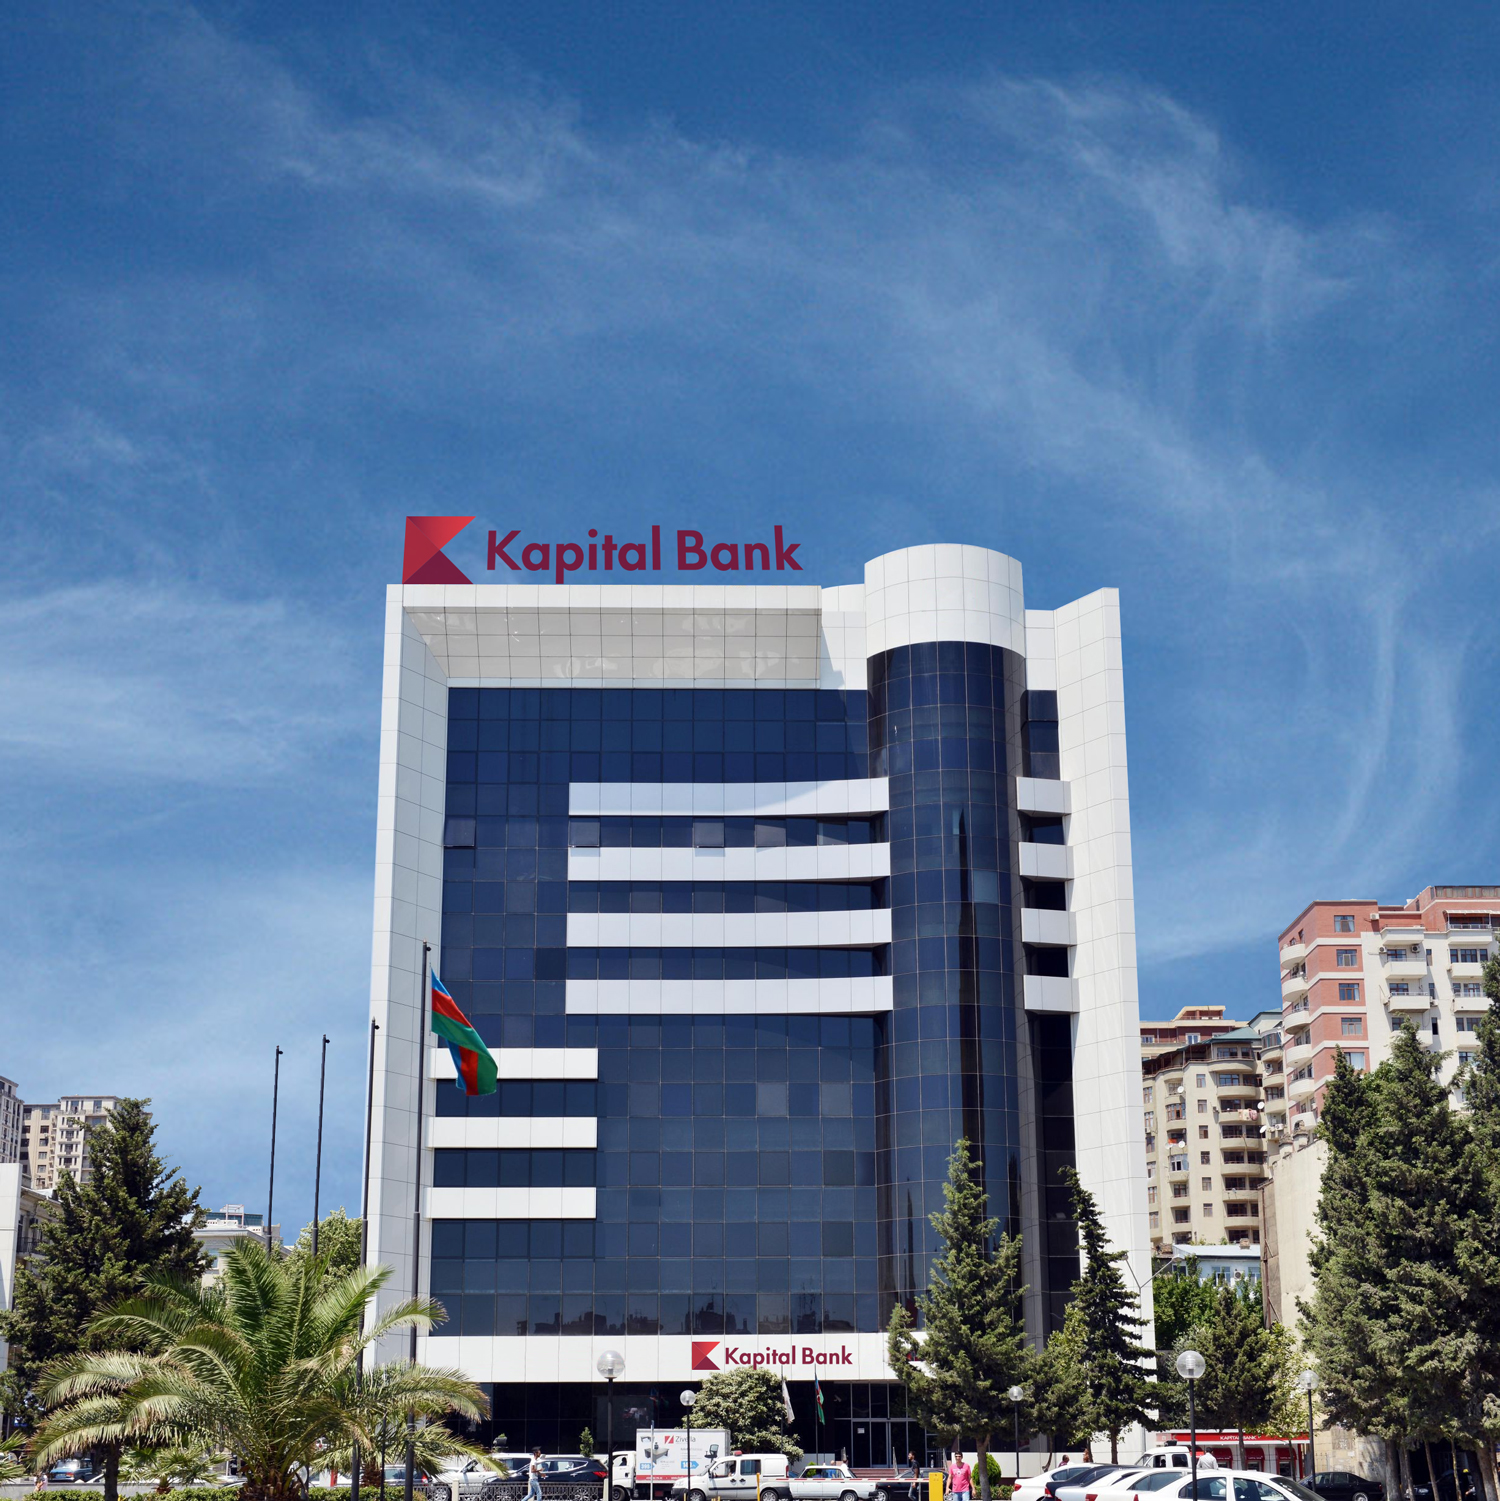 Kapital Bank — 145 years with you!